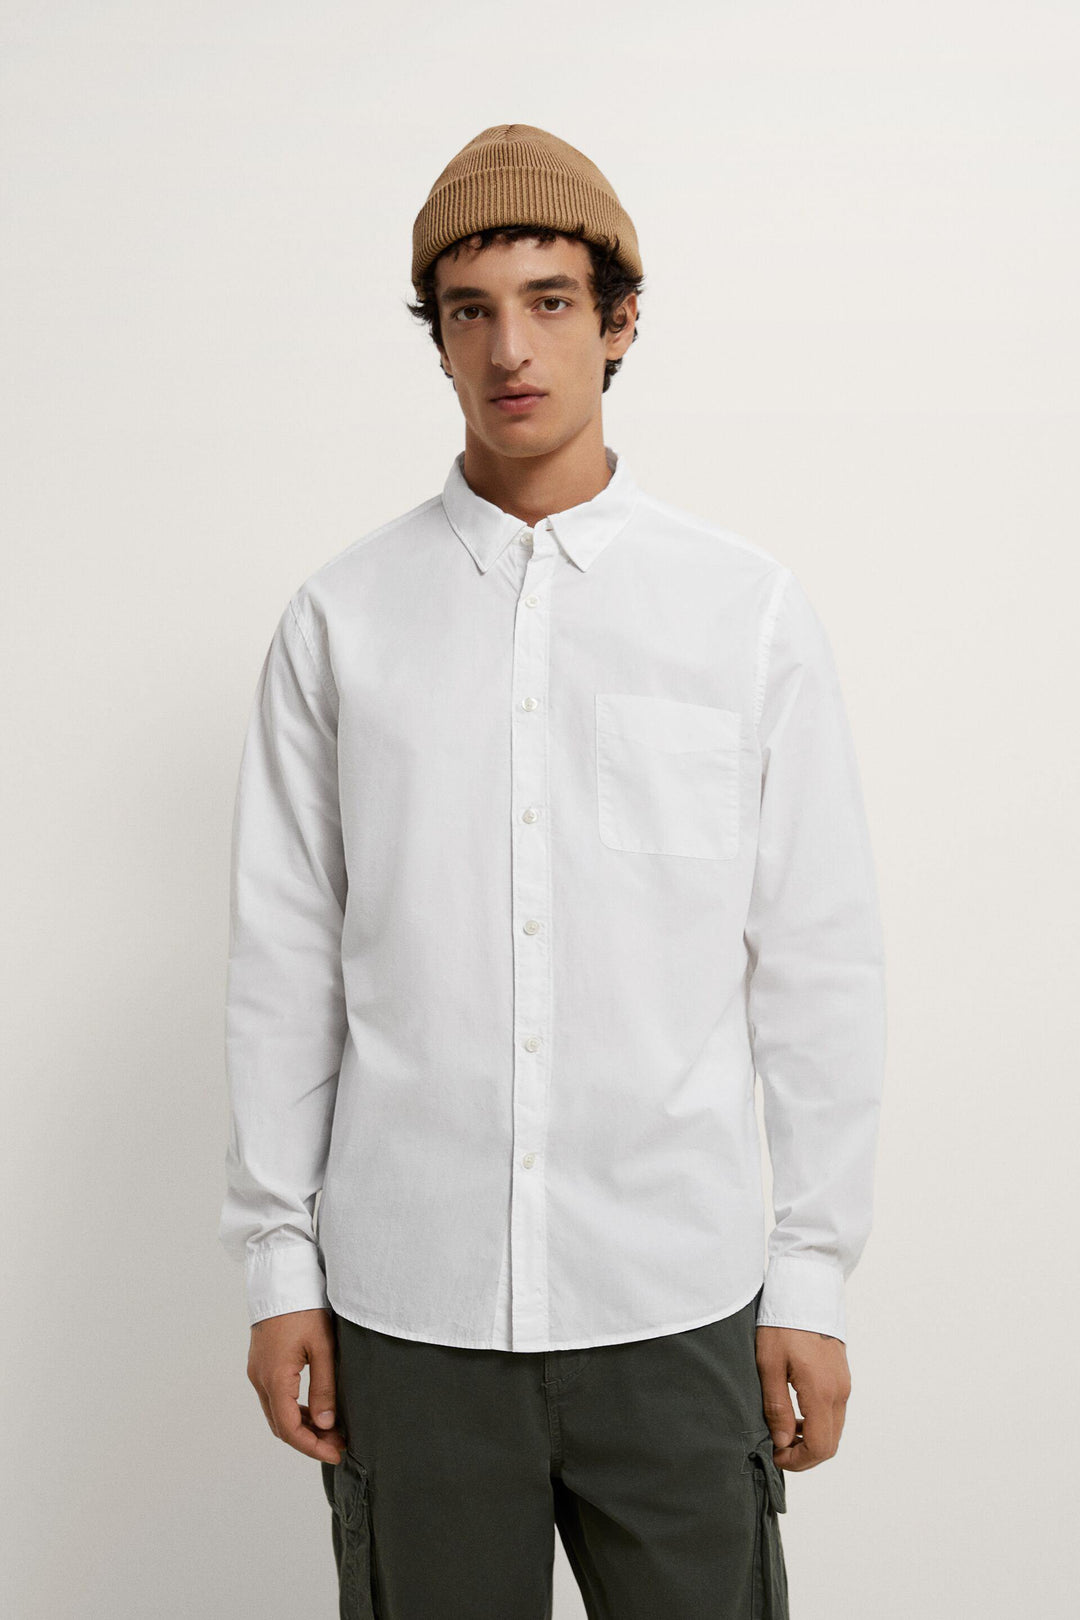 ZaraMan Casual L/S Plain Shirt 6917/375/250